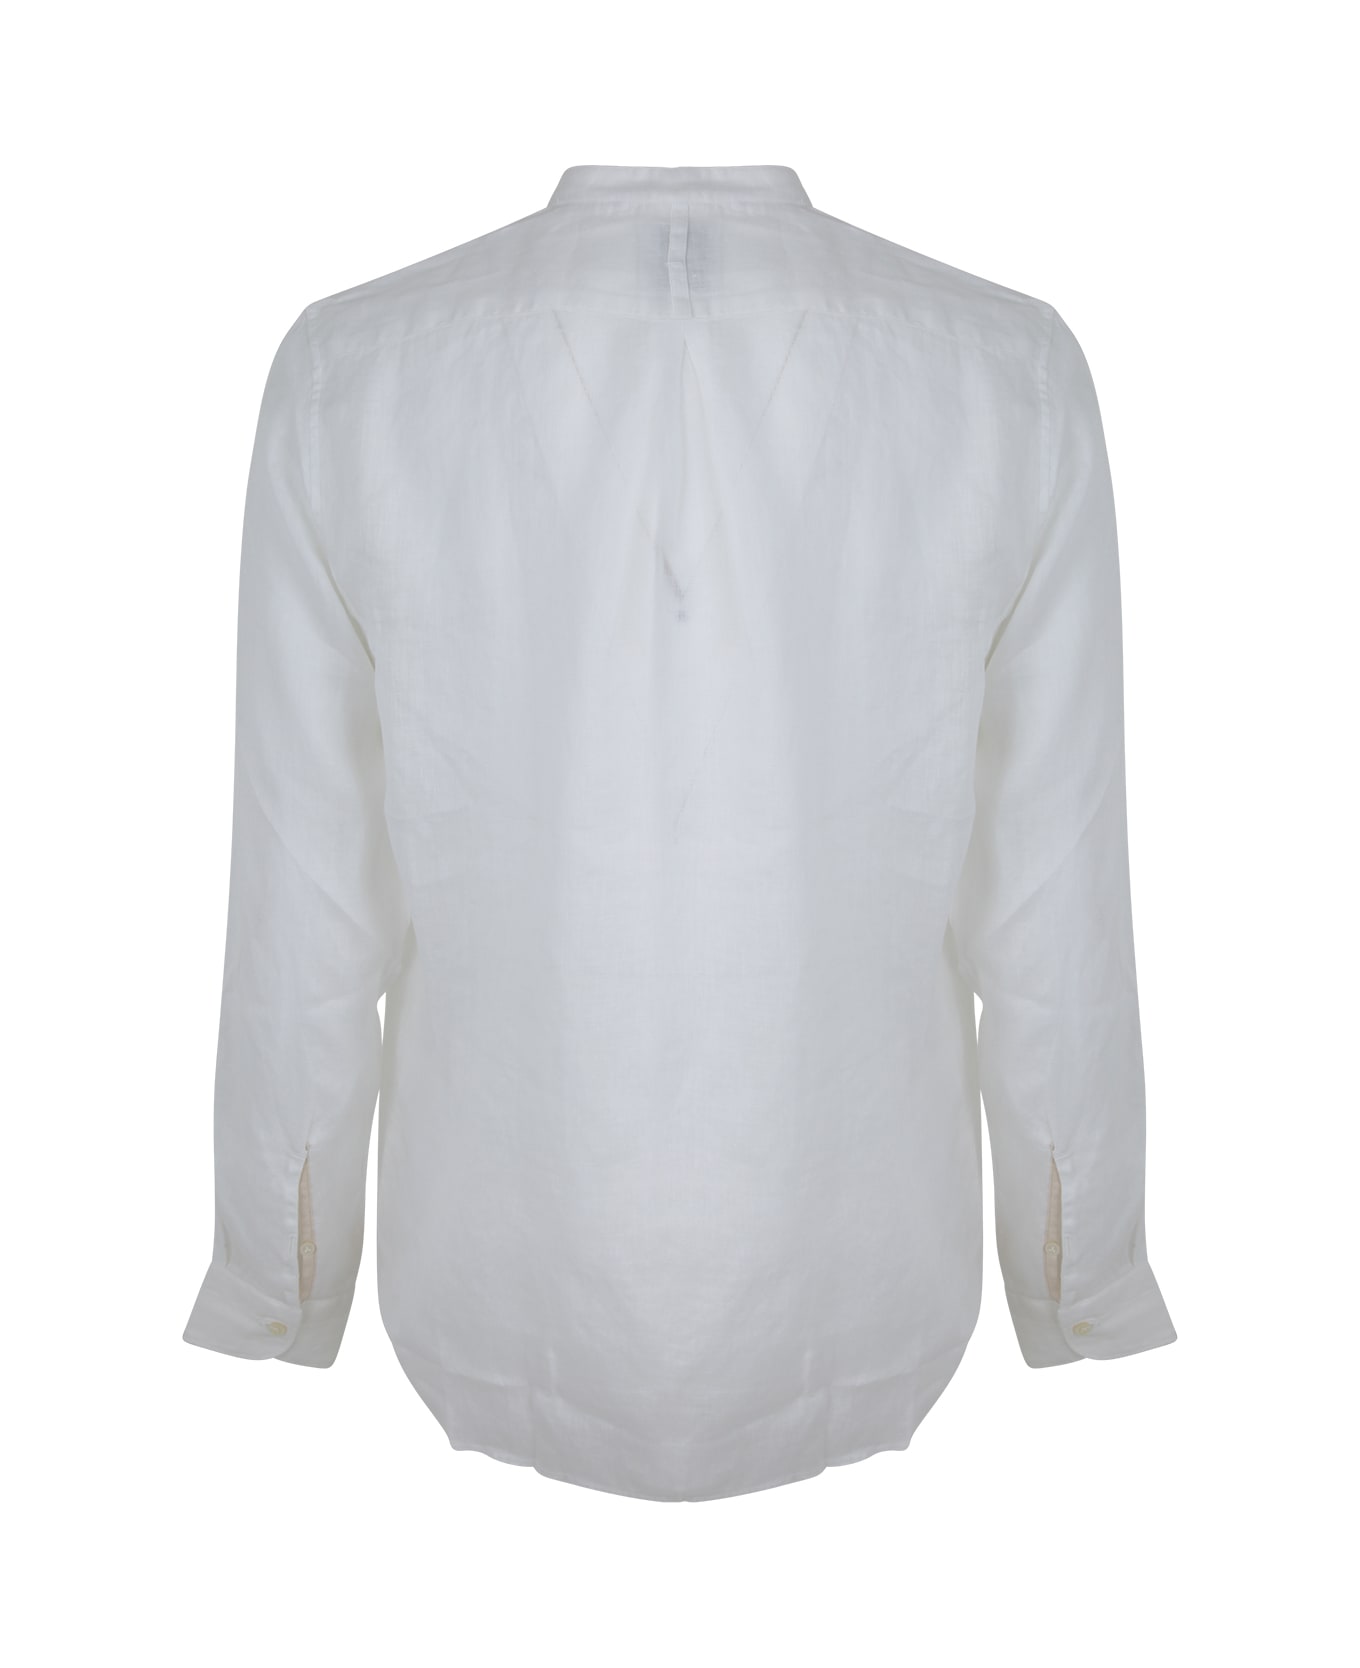 DNL Korean Neck Shirt - White